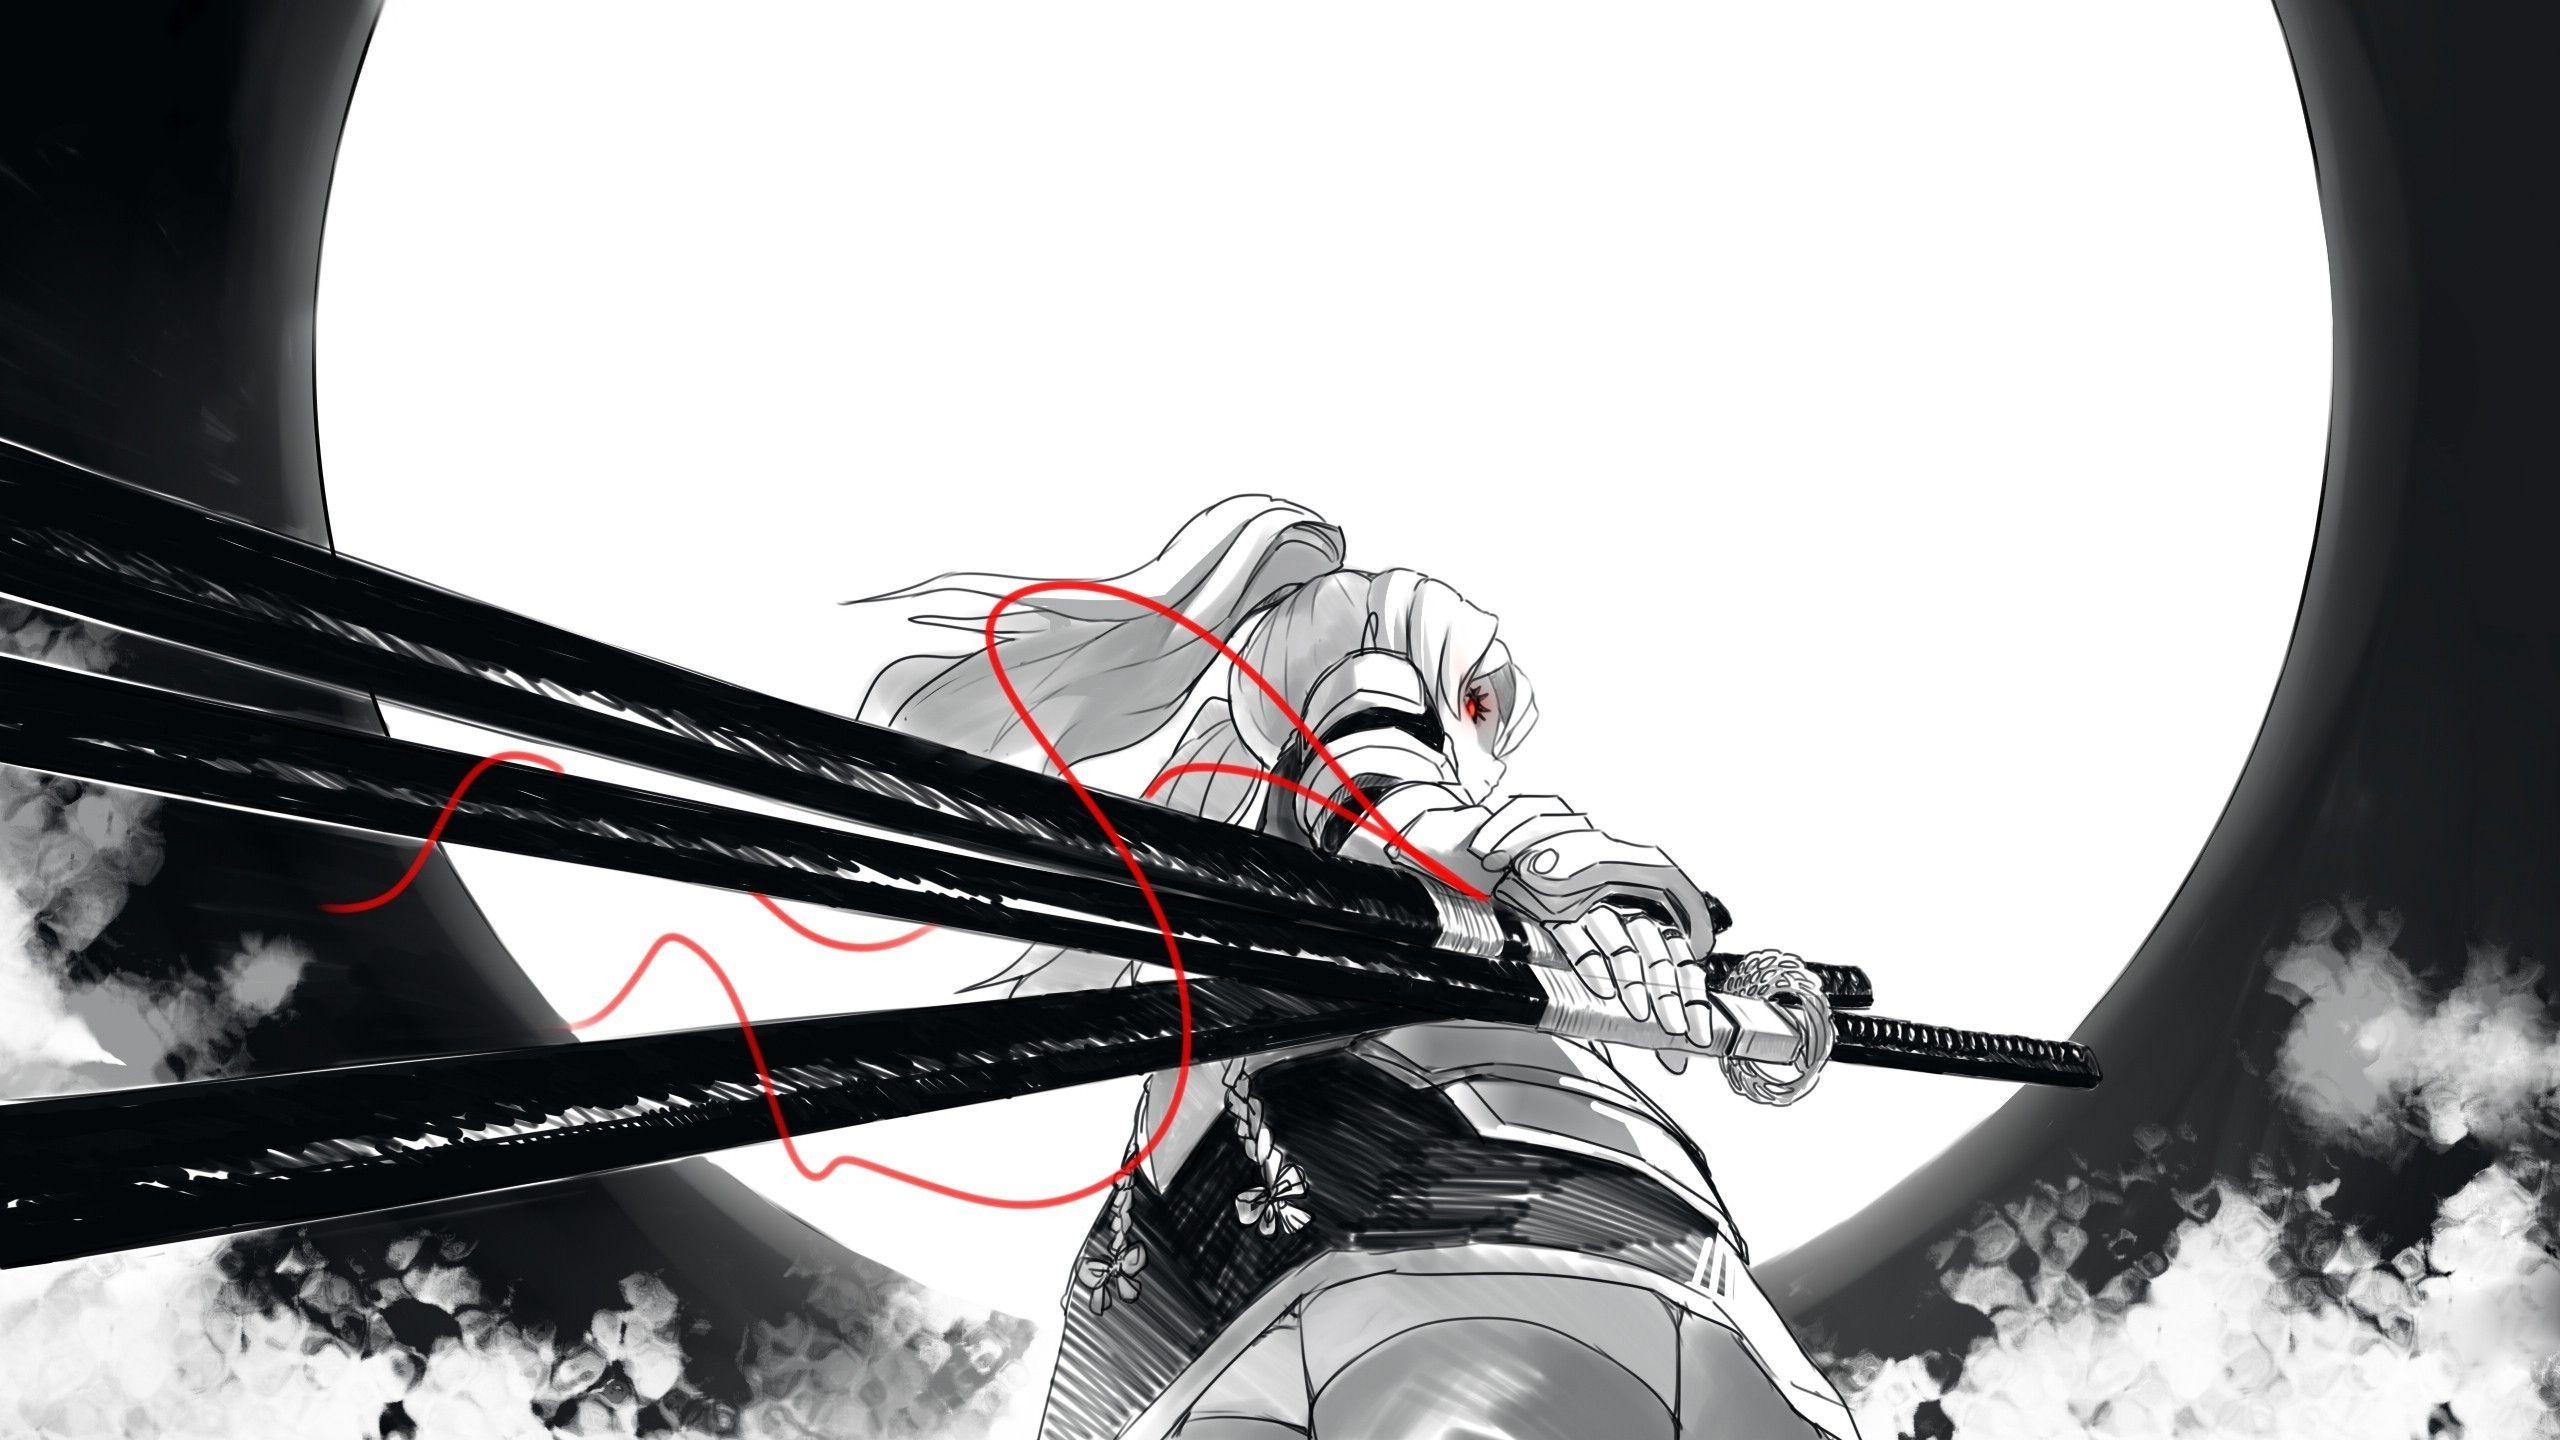 Anime Samurai Wallpapers Top Free Anime Samurai Backgrounds Wallpaperaccess